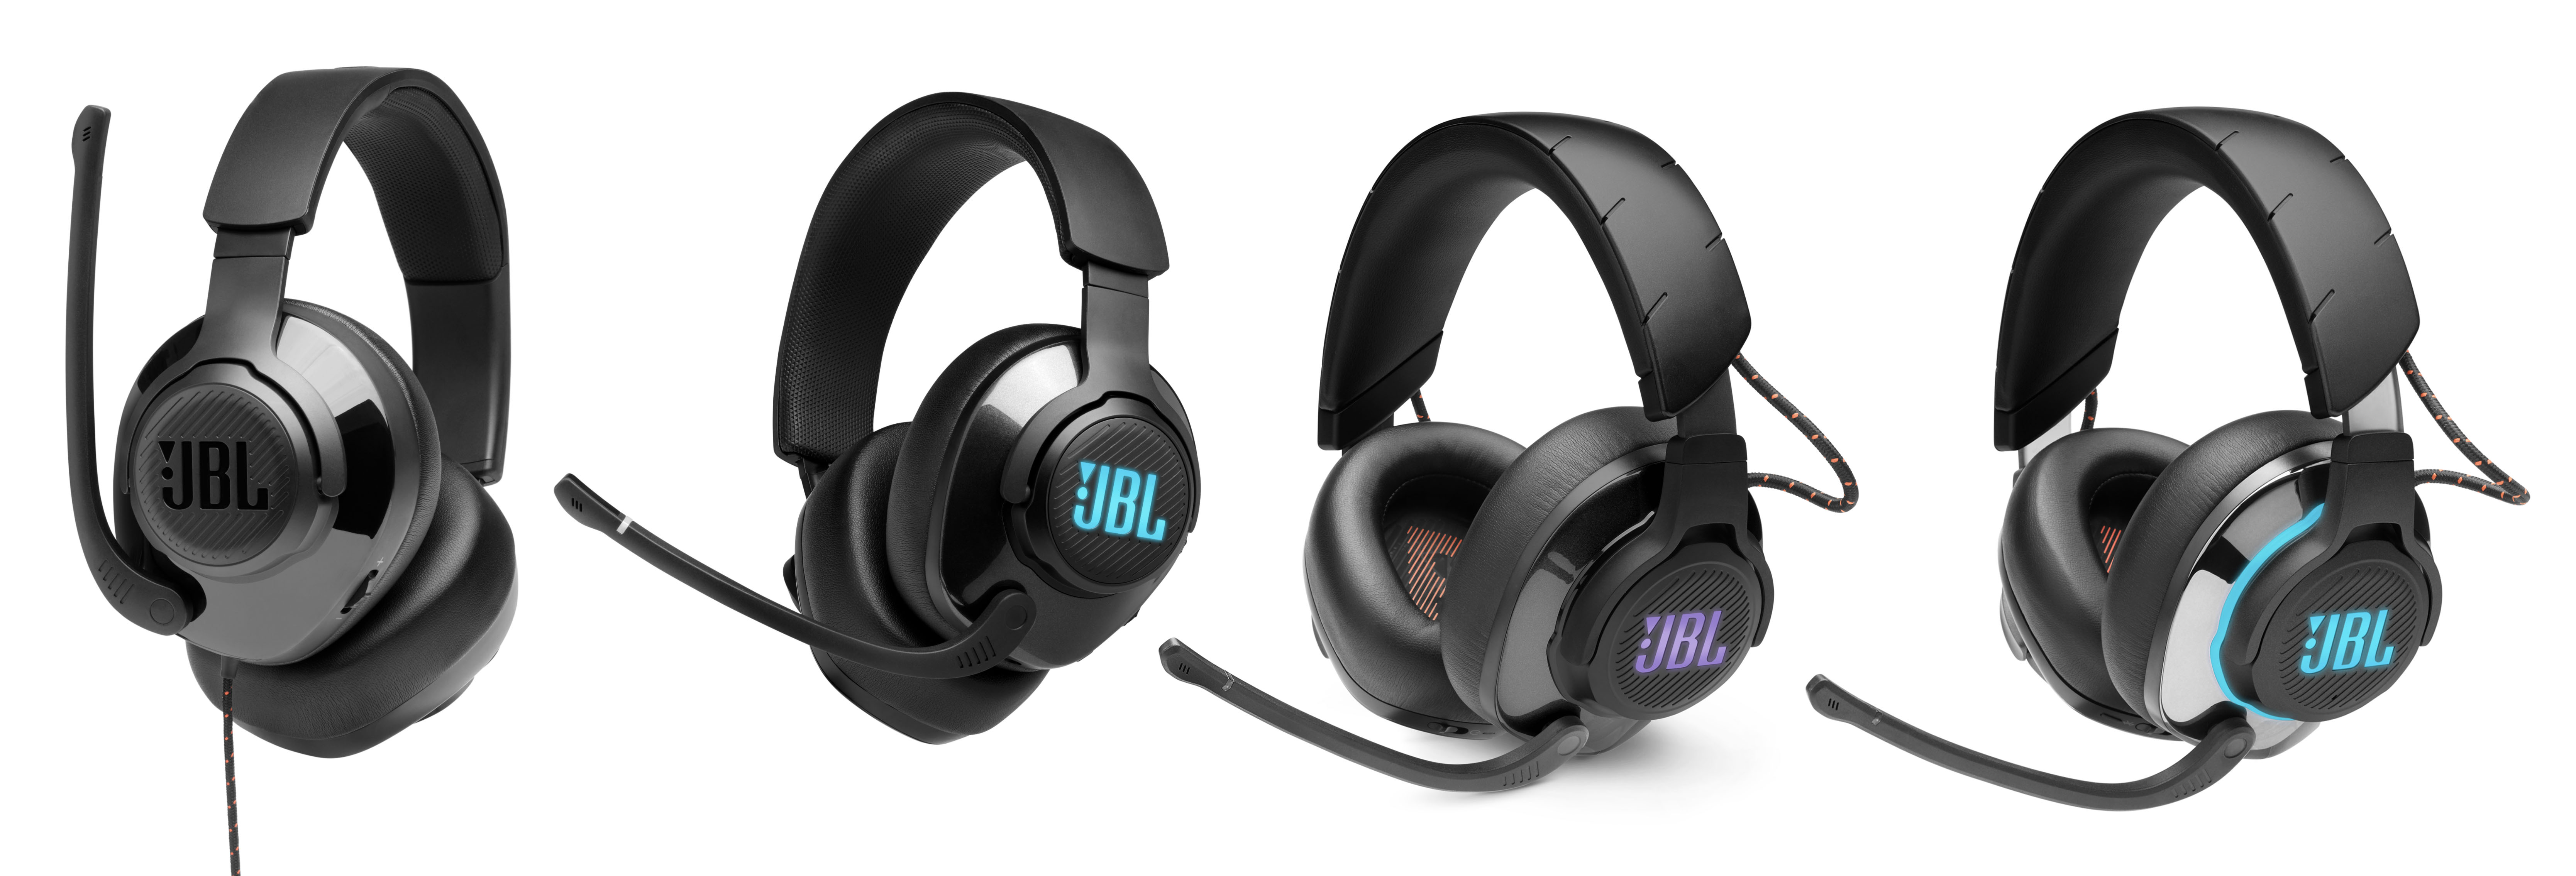 JBL Quantum headphones